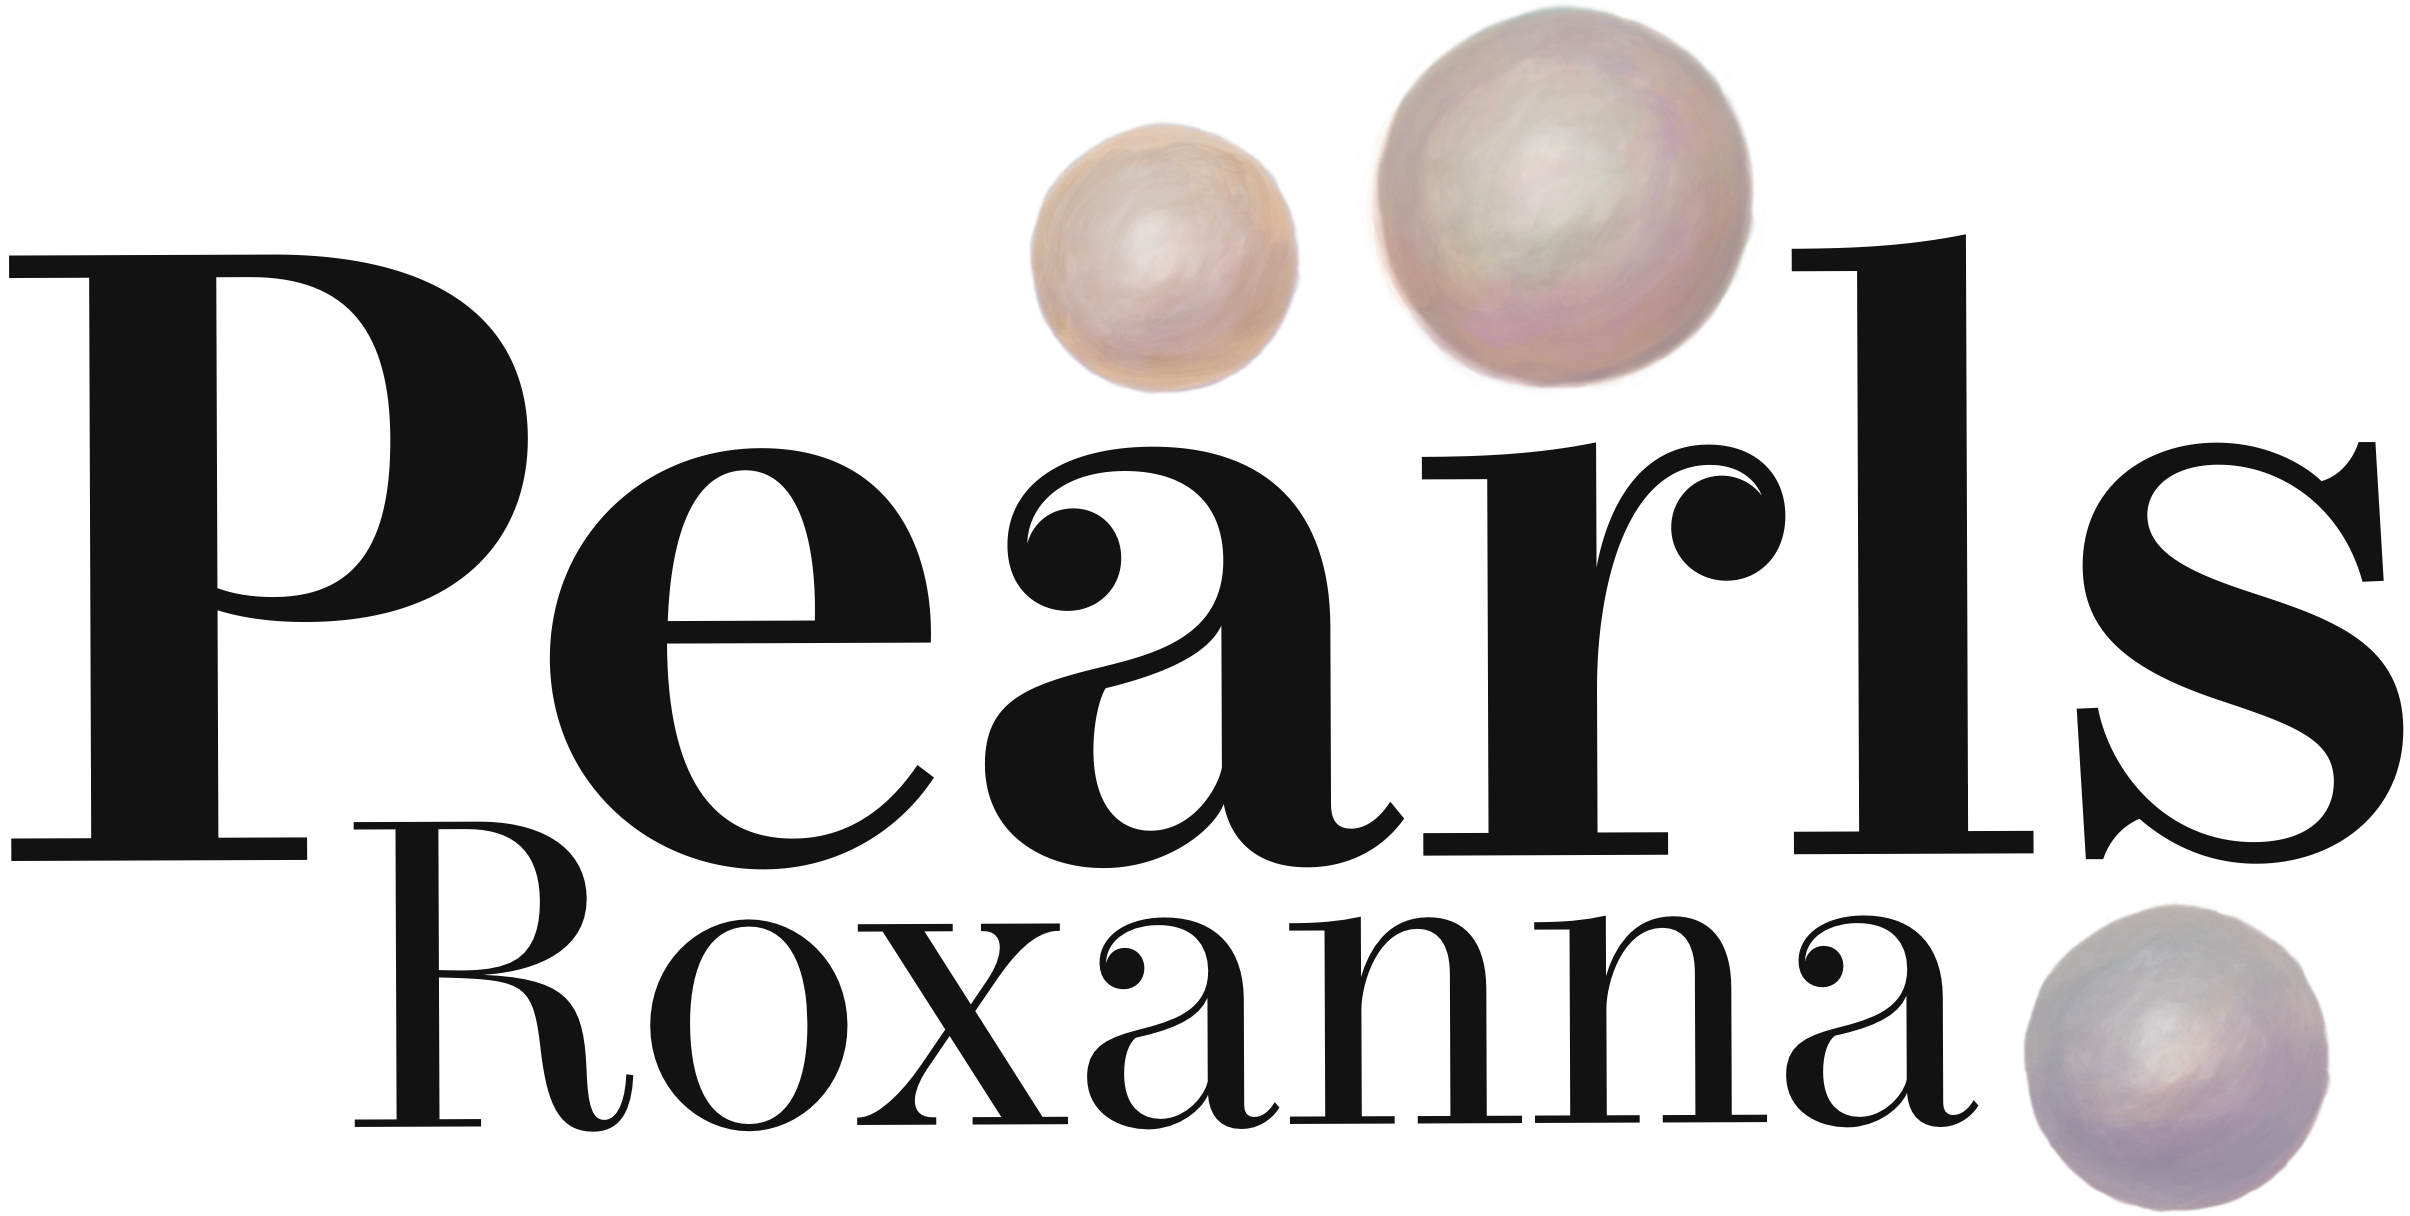 Pearls Roxanna logo